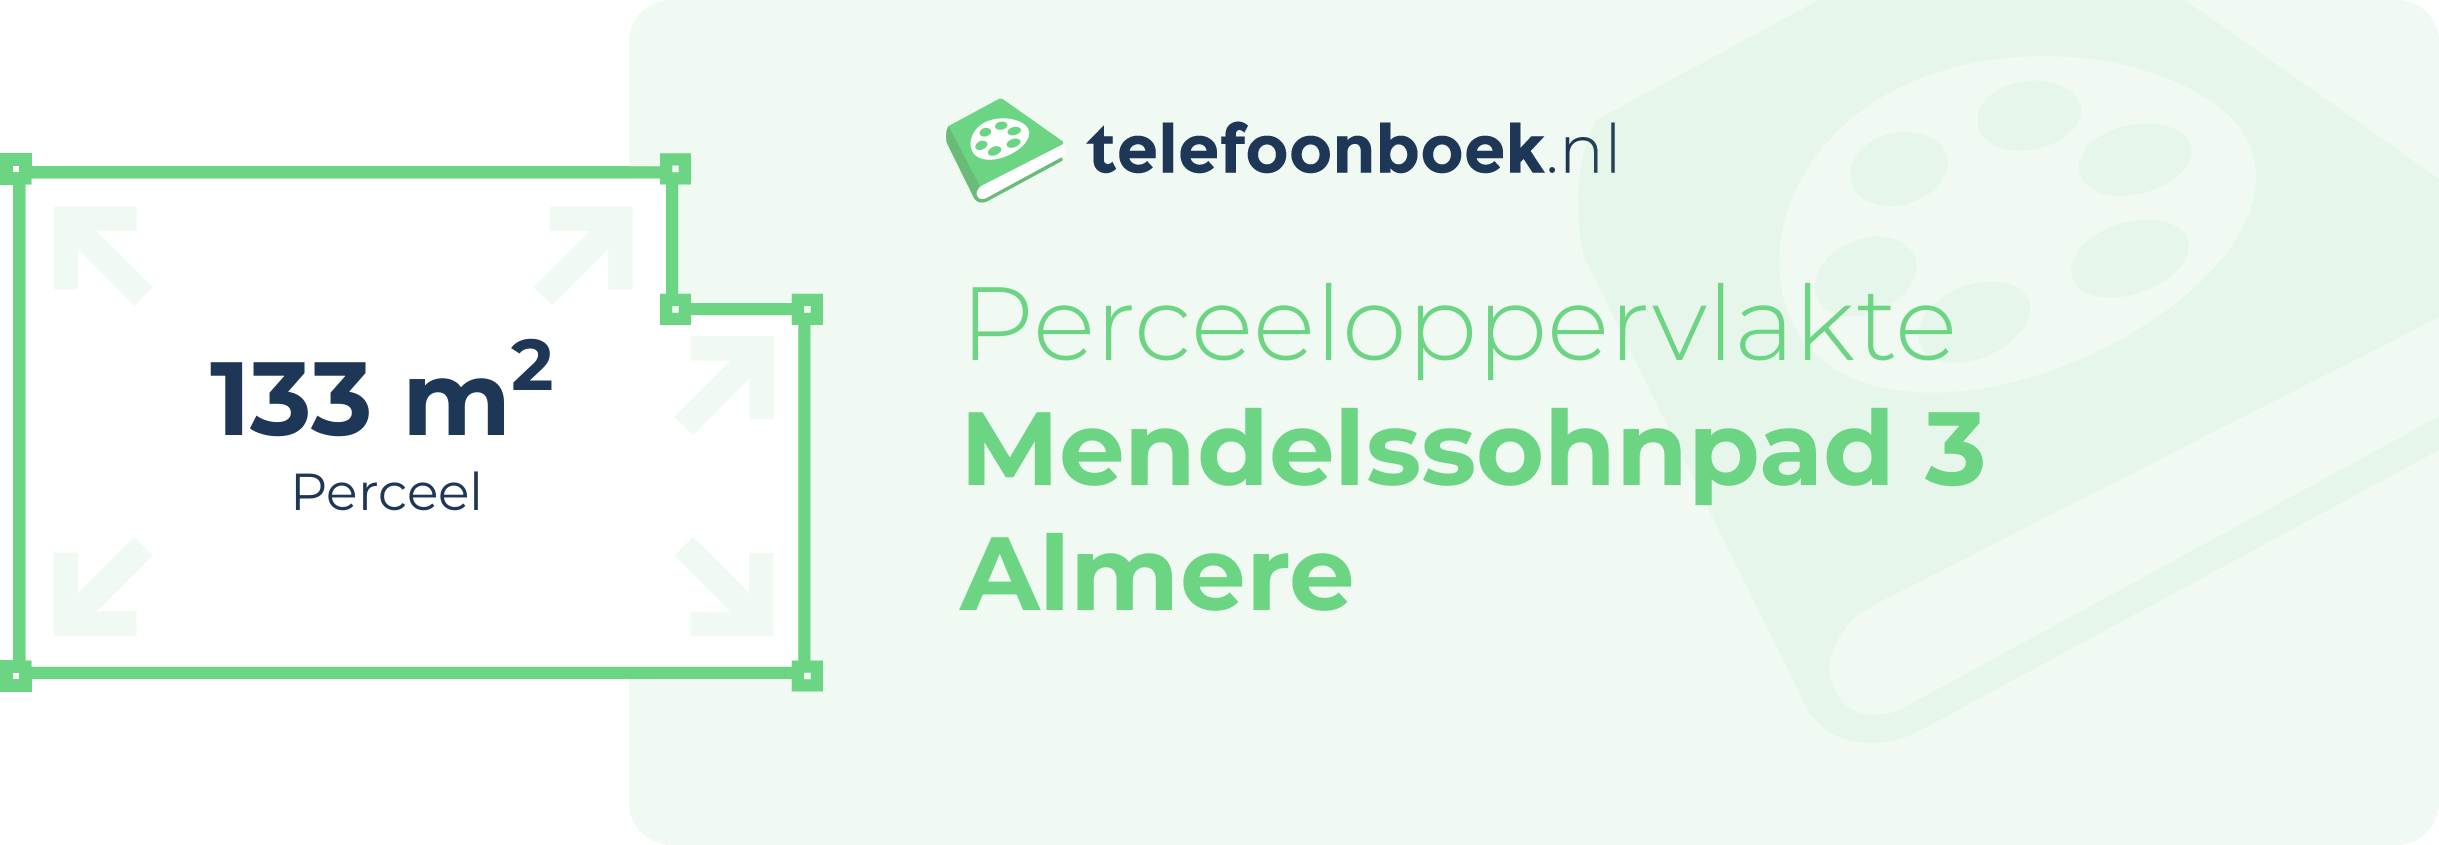 Perceeloppervlakte Mendelssohnpad 3 Almere